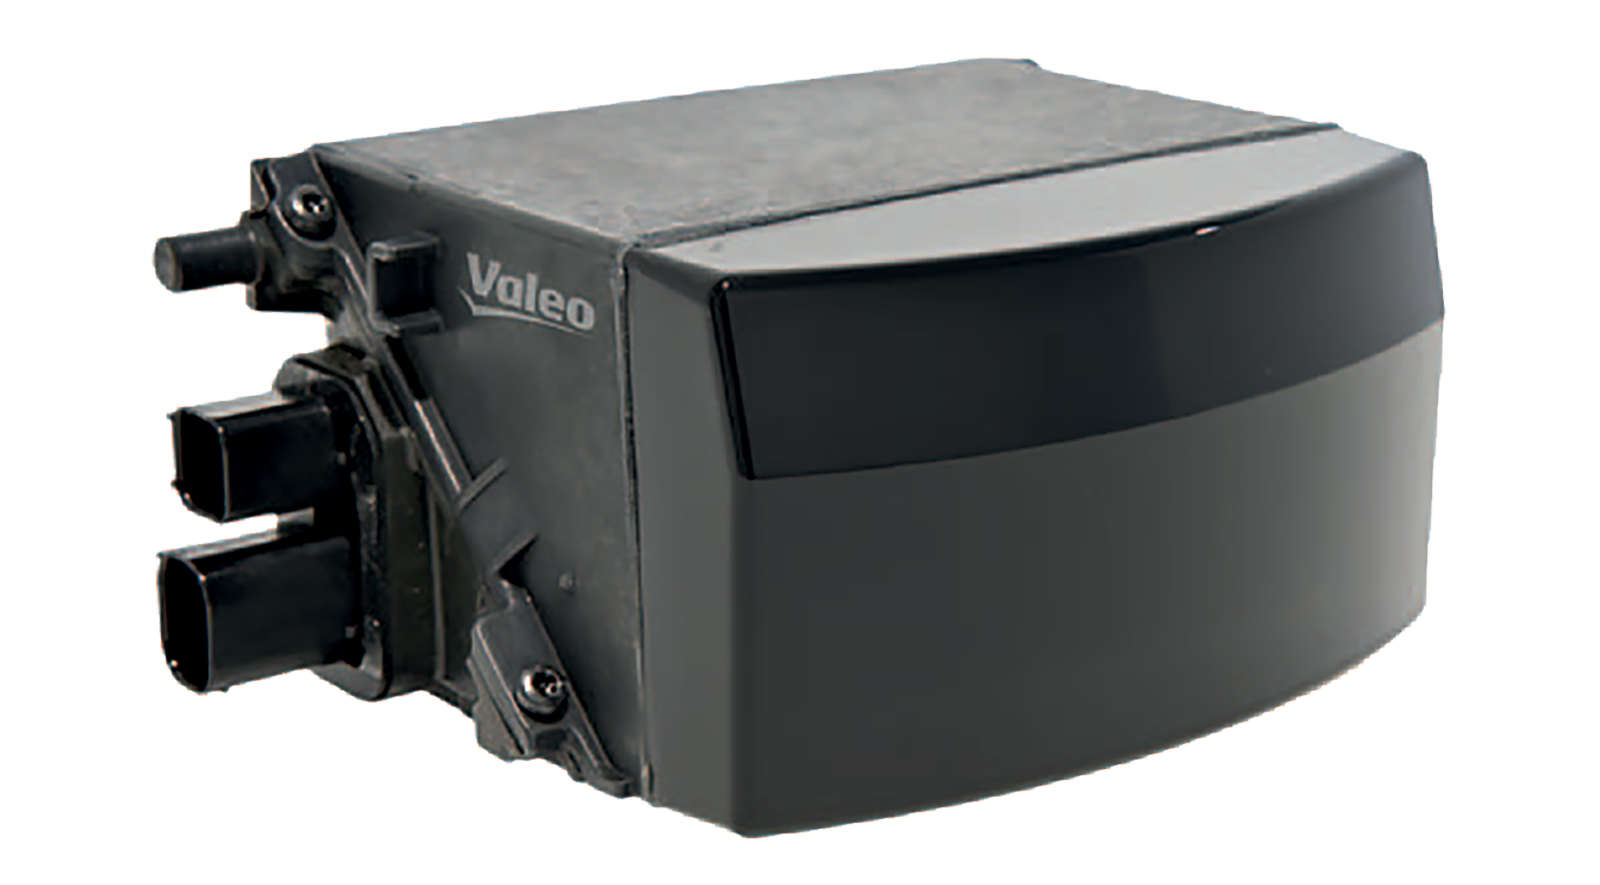 Valeo SCALA 3D Laser Scanner (Gen 2)